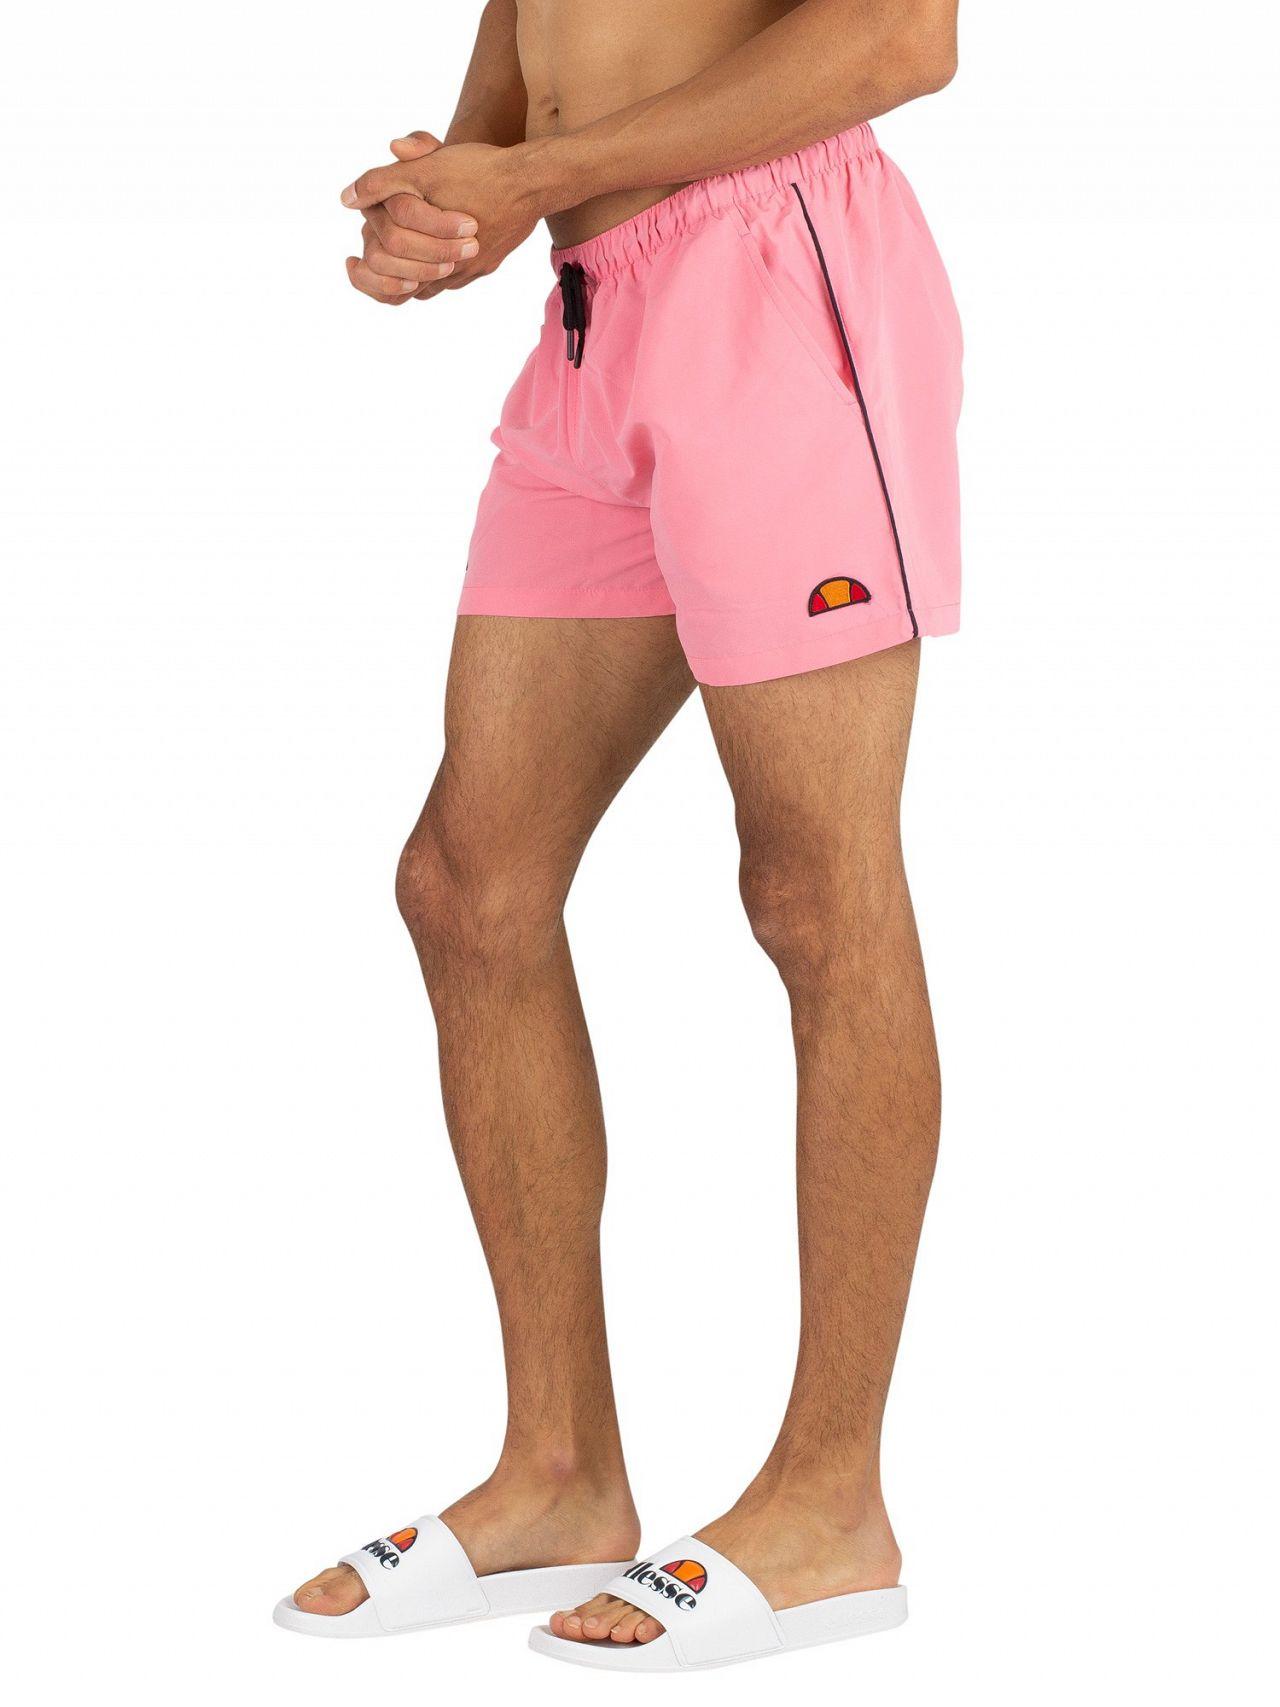 ellesse pink swim shorts